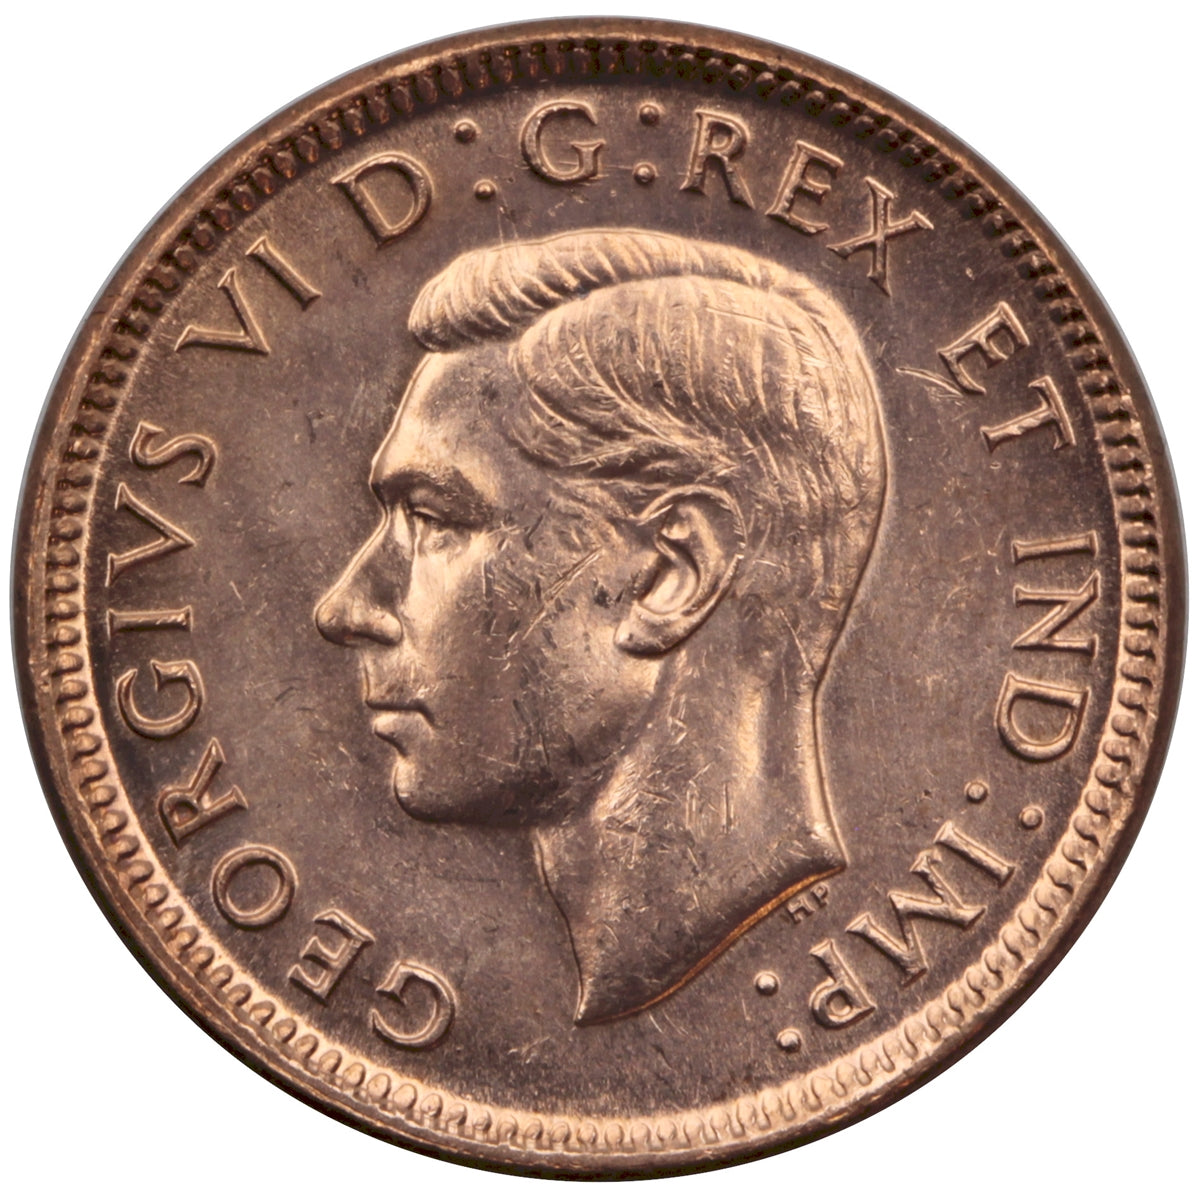 1945 Canada 1-cent Brilliant Uncirculated (MS-63)